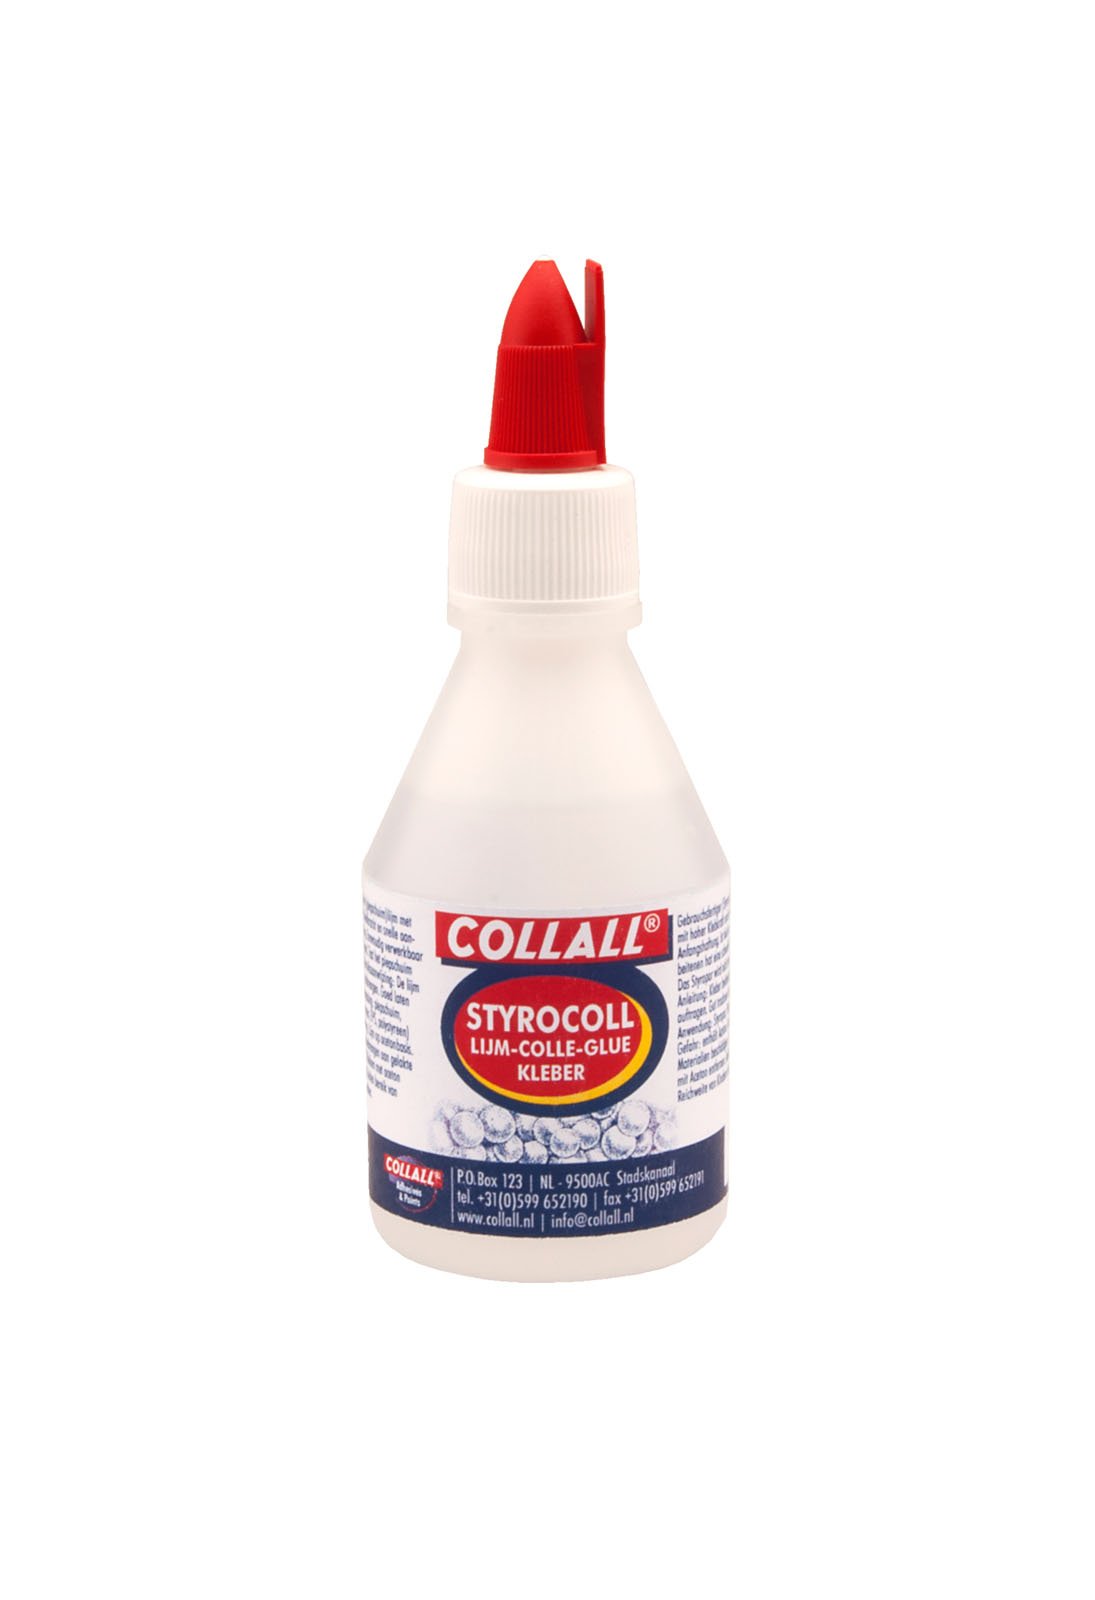 Collall • Styropor-styrocoll glue 100ml